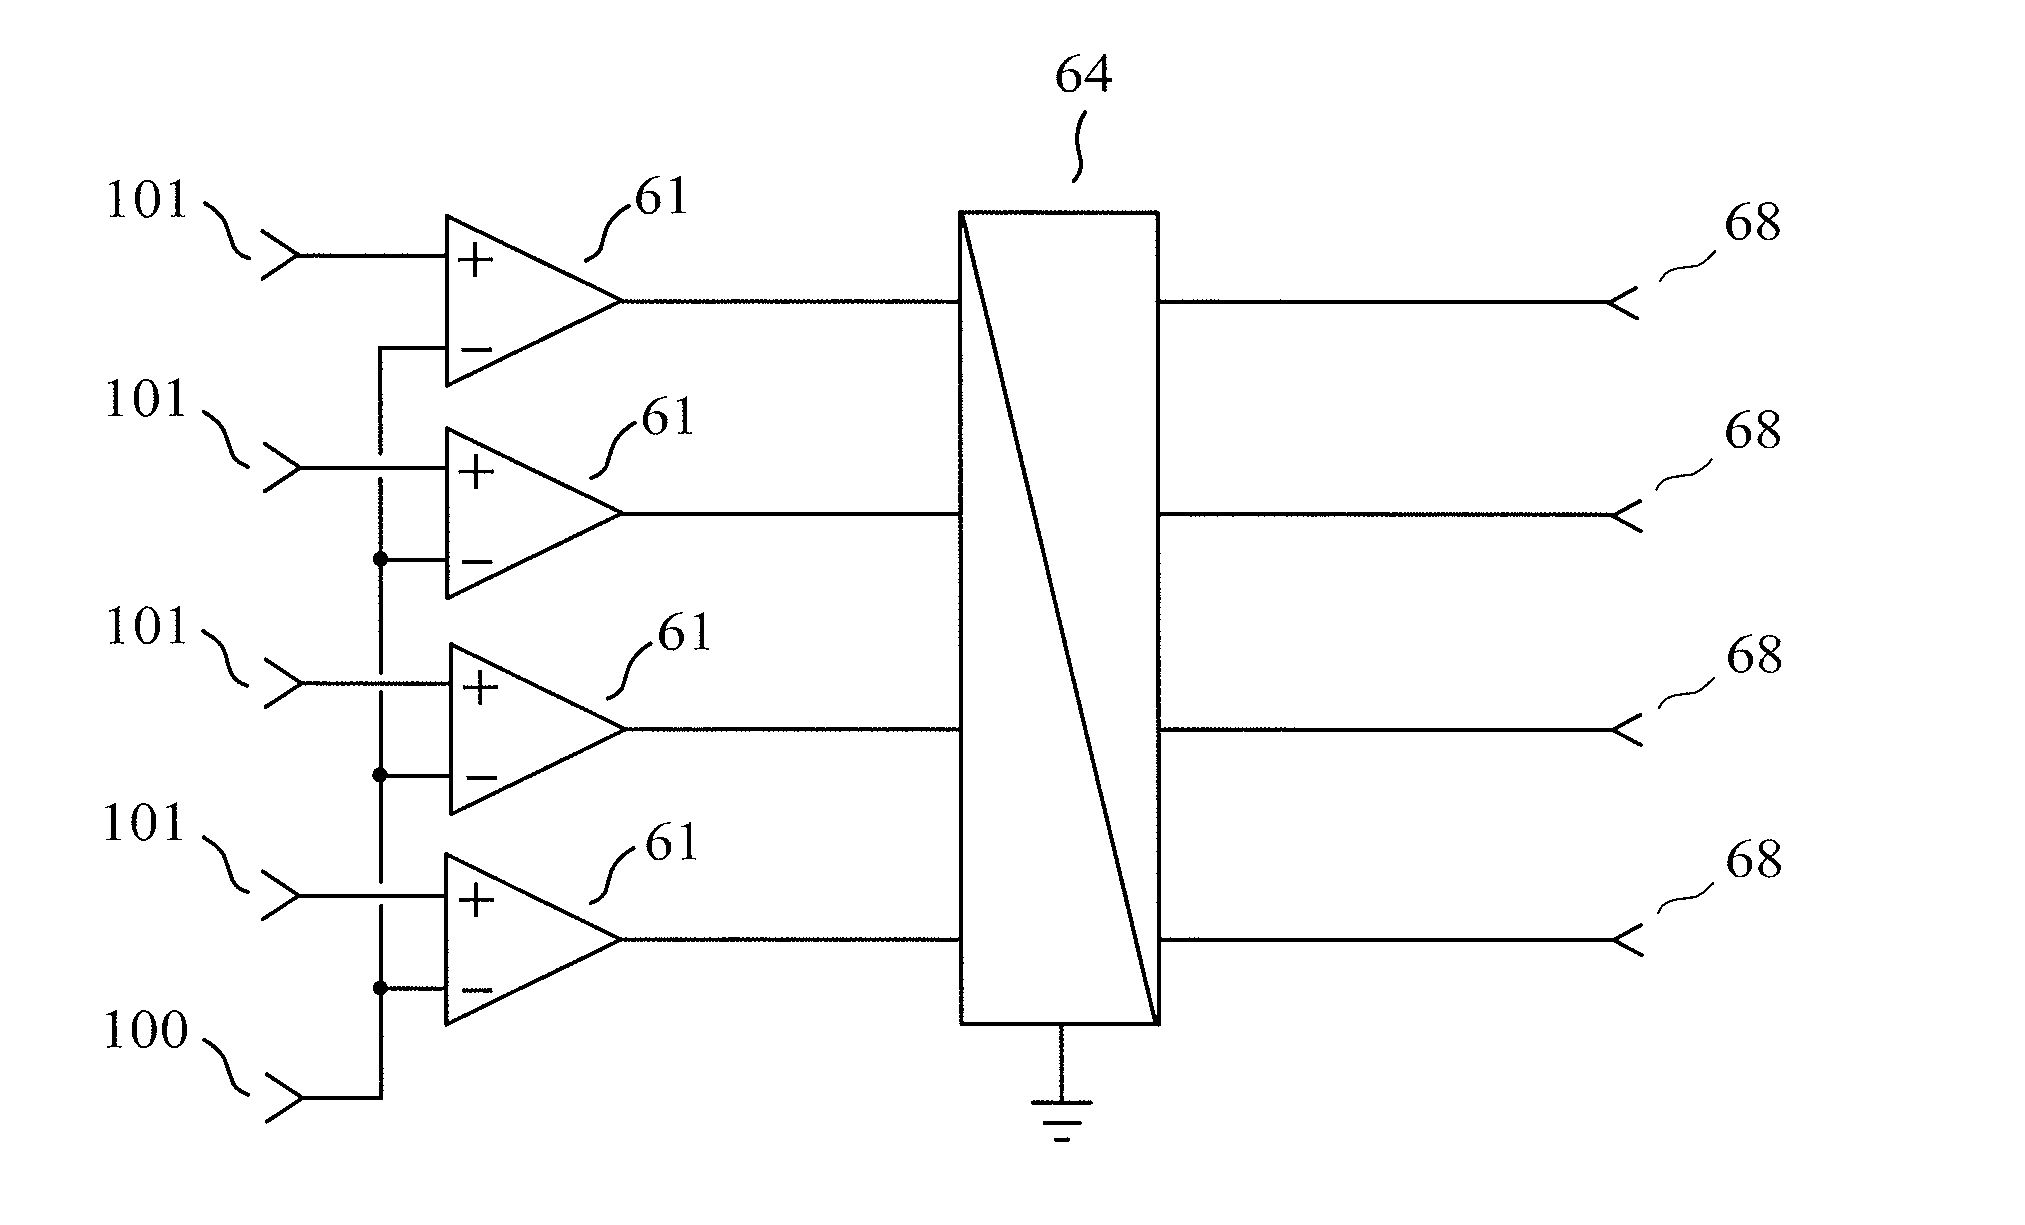 Pseudo-differential receiving circuit